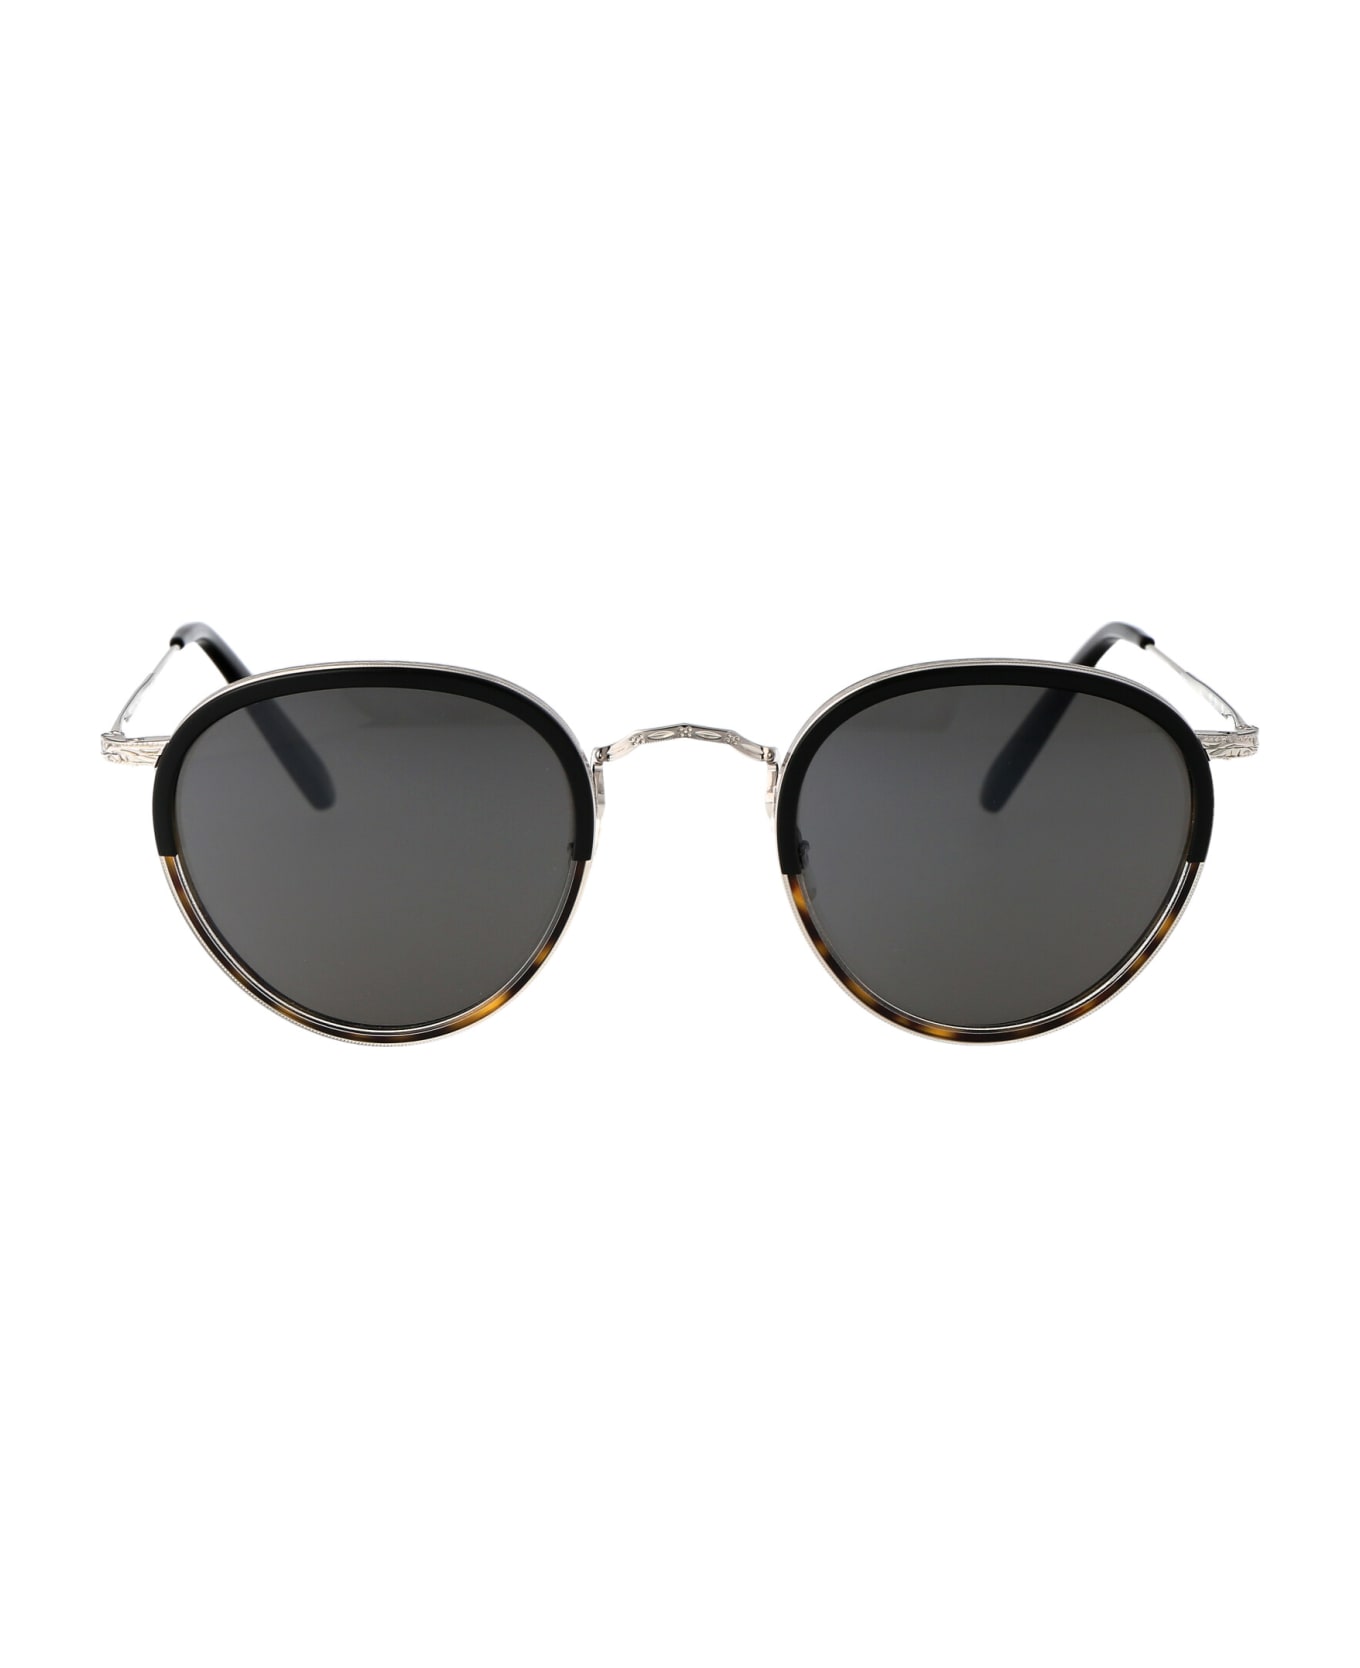 Oliver Peoples Mp-2 Sun Sunglasses - 5036R5 Black/362 Gradient/Silver サングラス